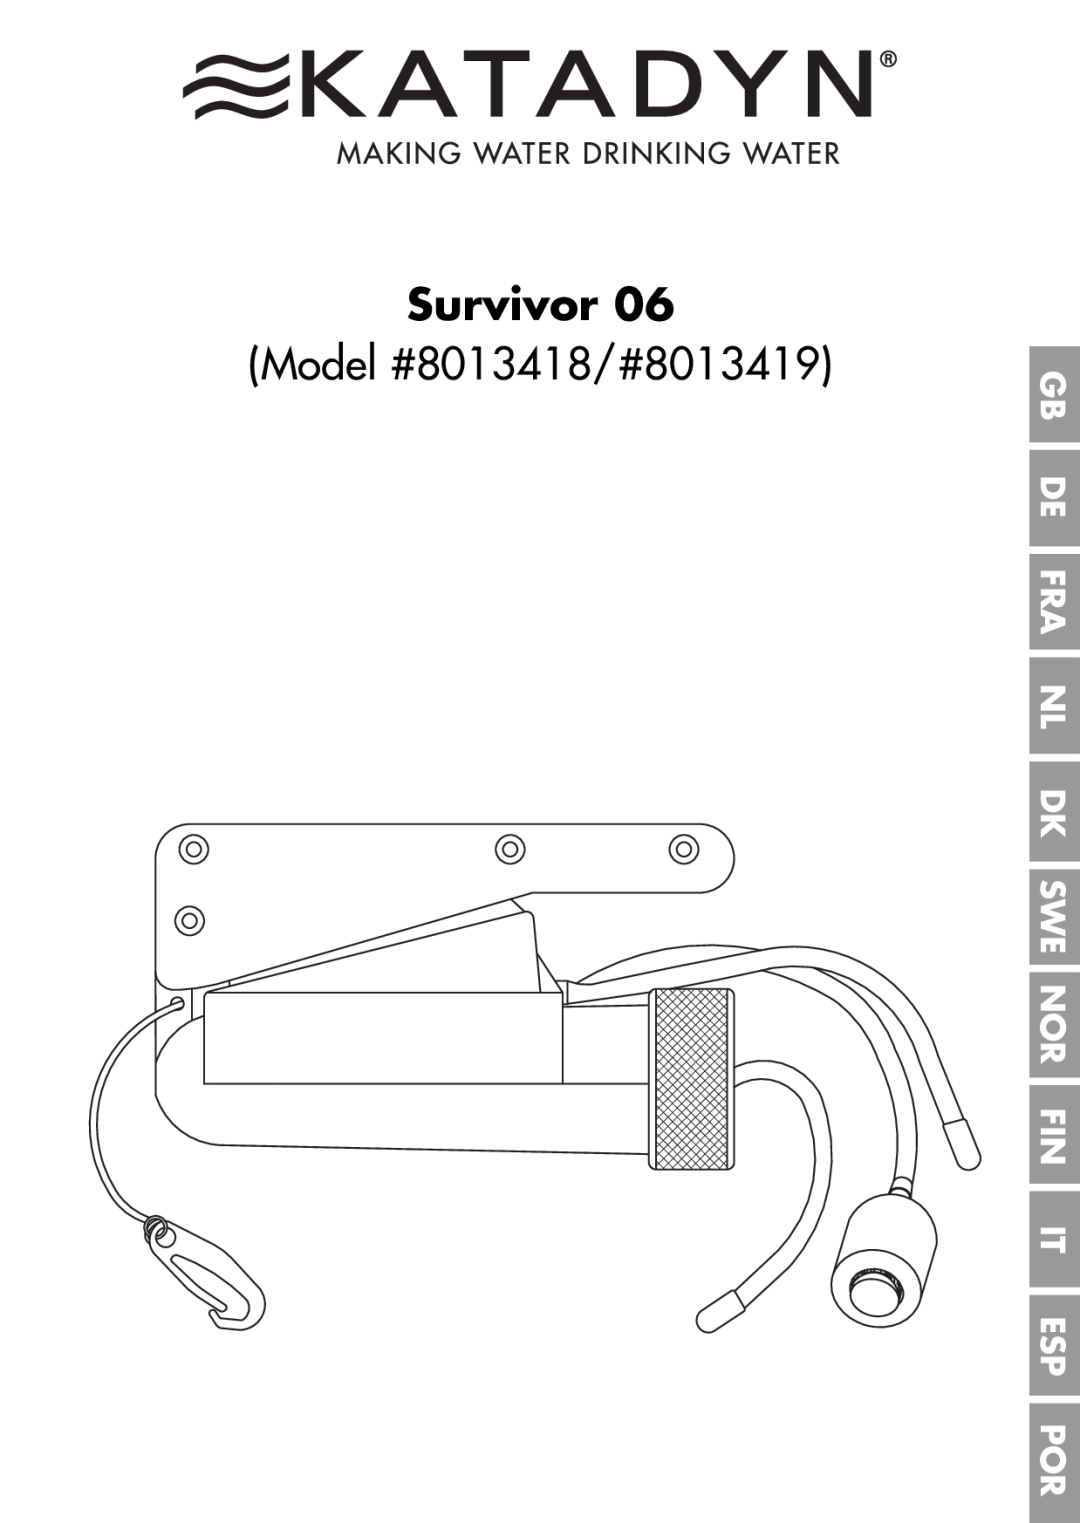 Katadyn manual Gb De Fra Nl Dk Swe Nor Fin It Esp Por, Survivor, Model #8013418/#8013419 